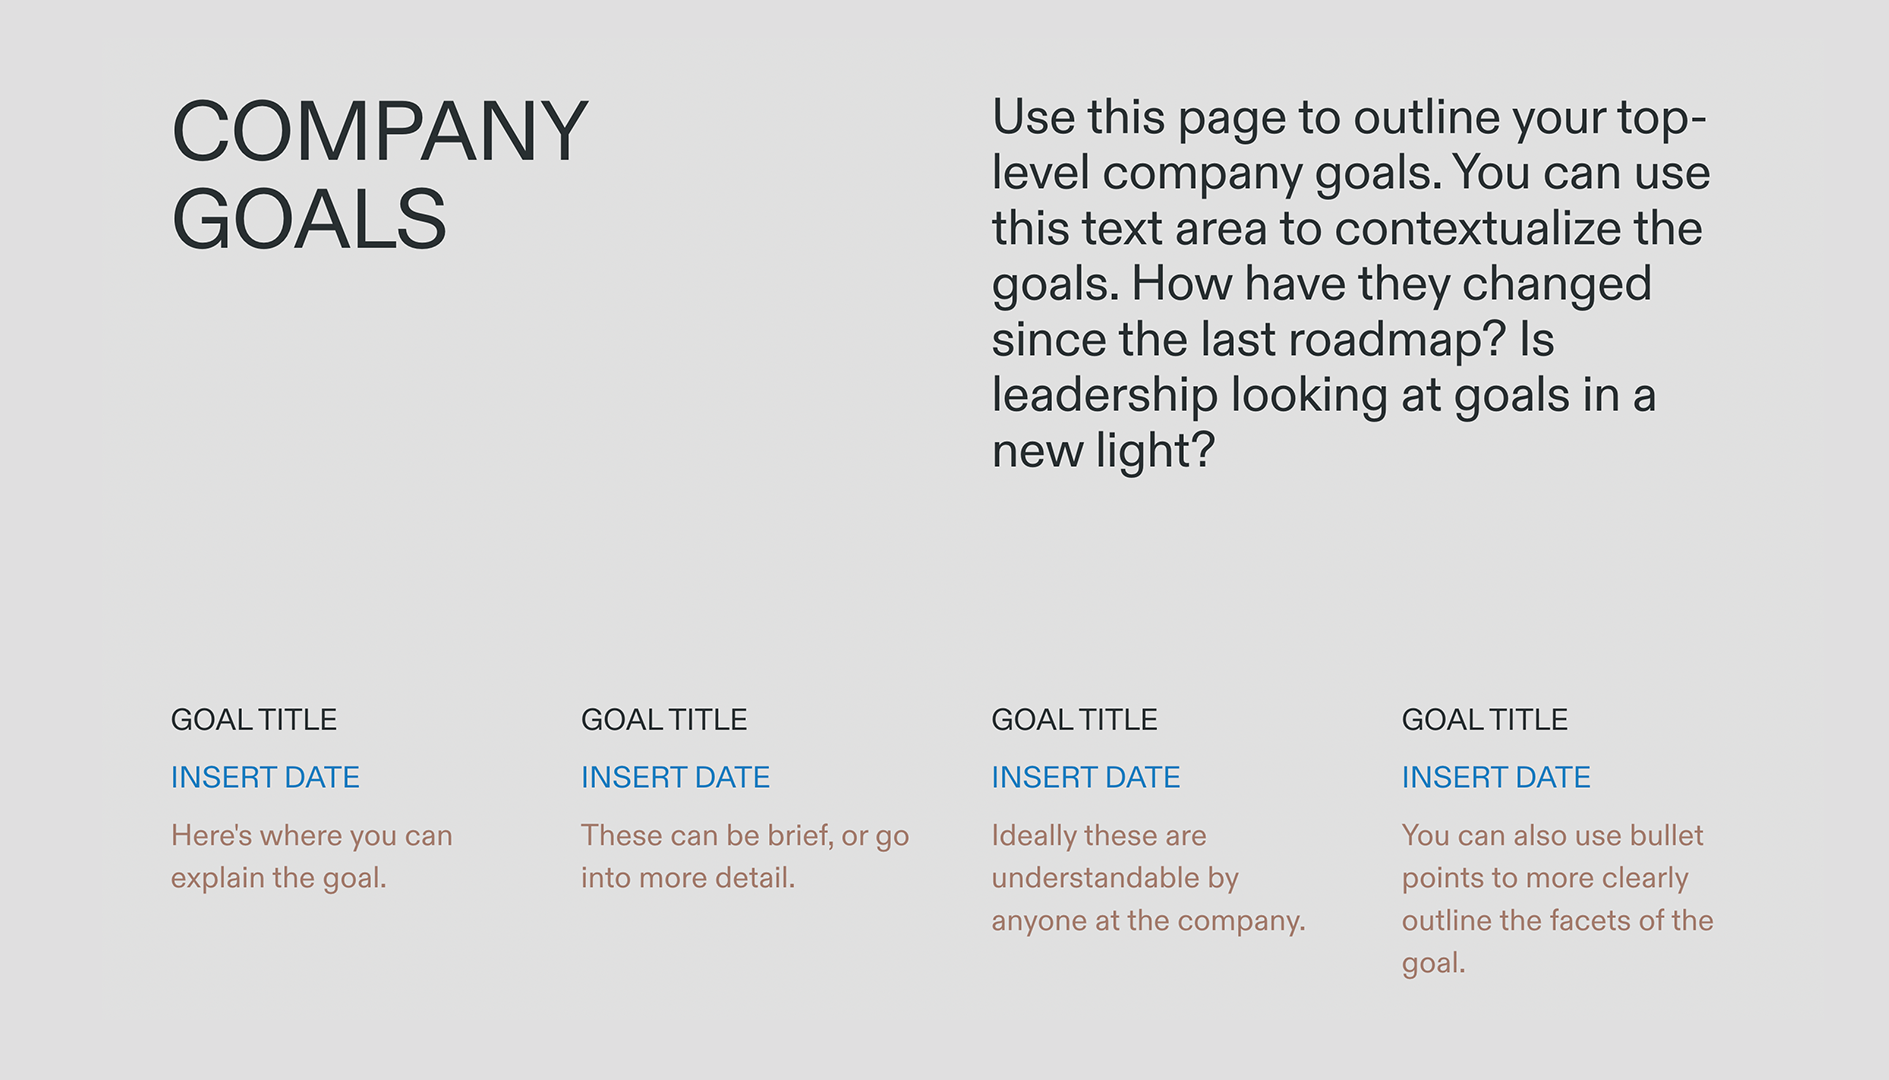 Company Roadmap - Goals